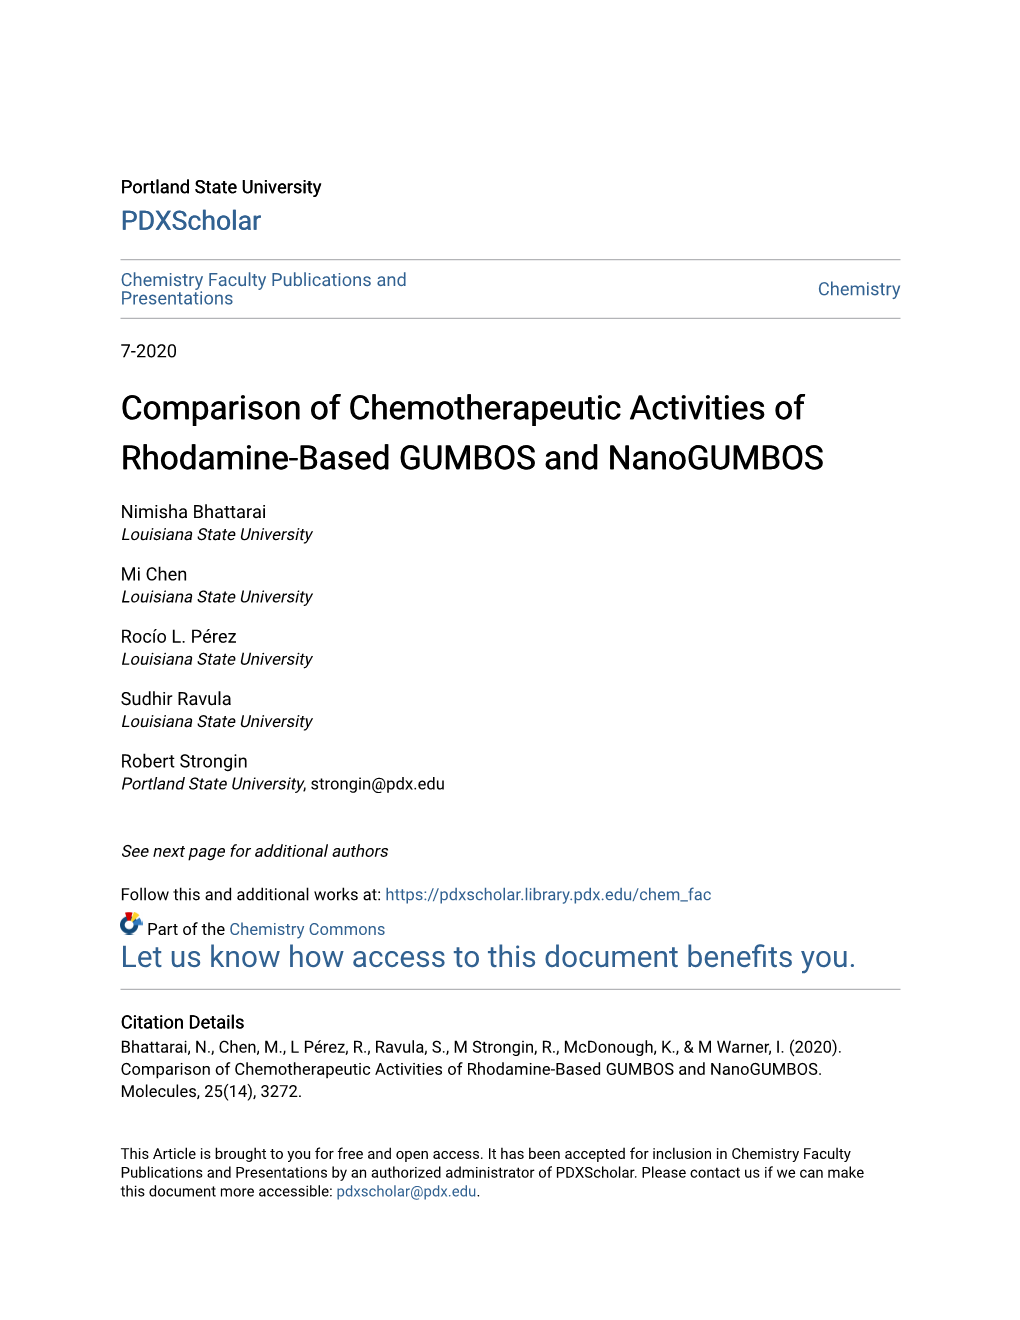 Comparison of Chemotherapeutic Activities of Rhodamine-Based GUMBOS and Nanogumbos